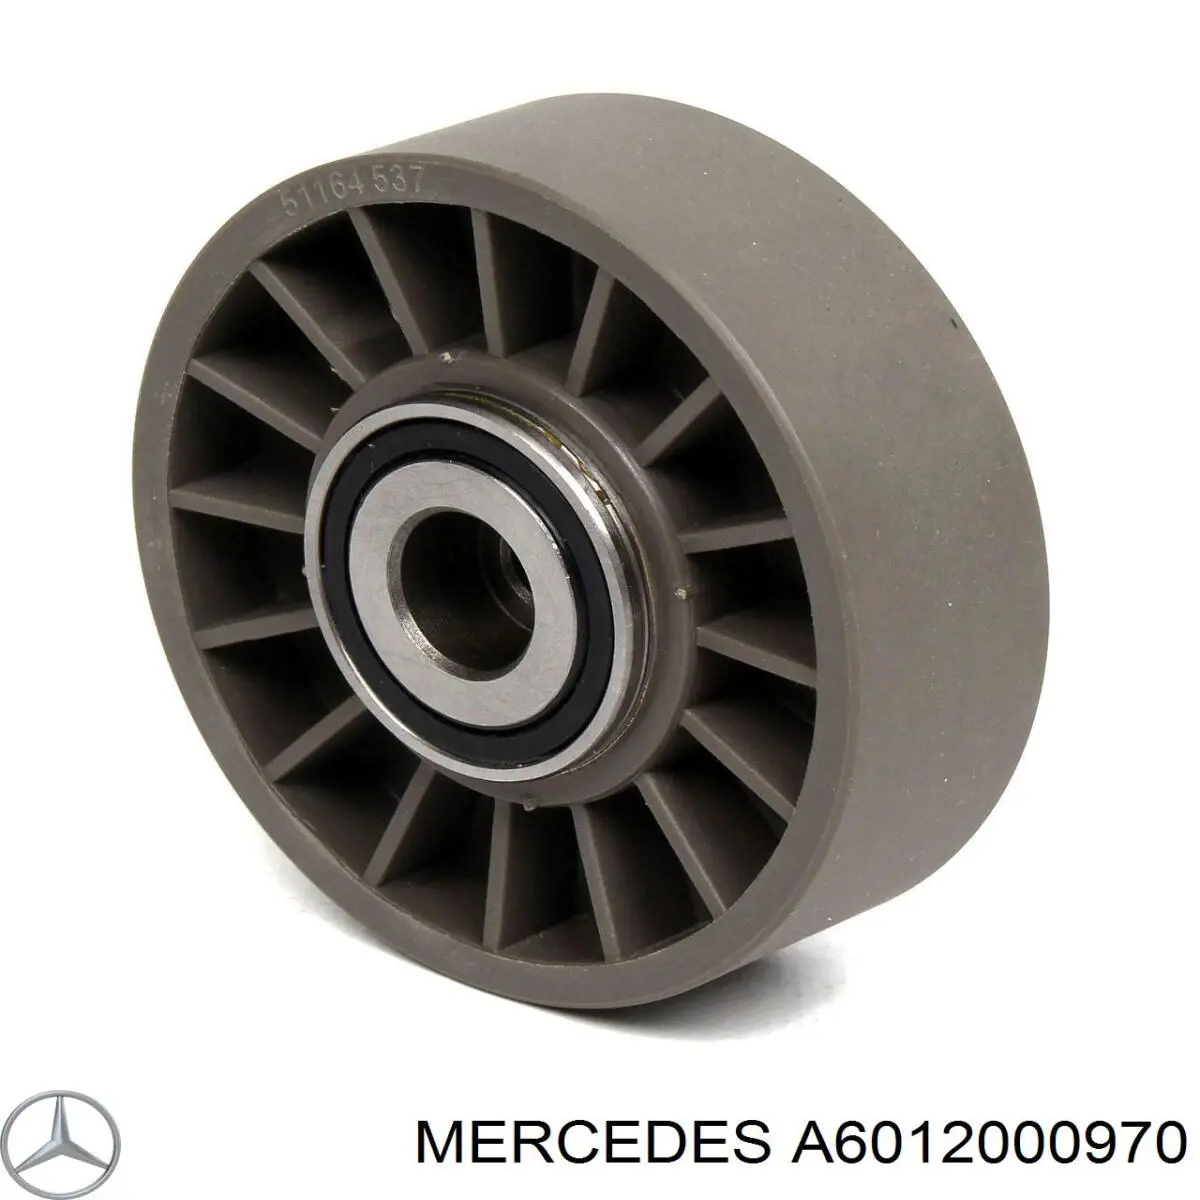 A6012000970 Mercedes polea tensora, correa poli v